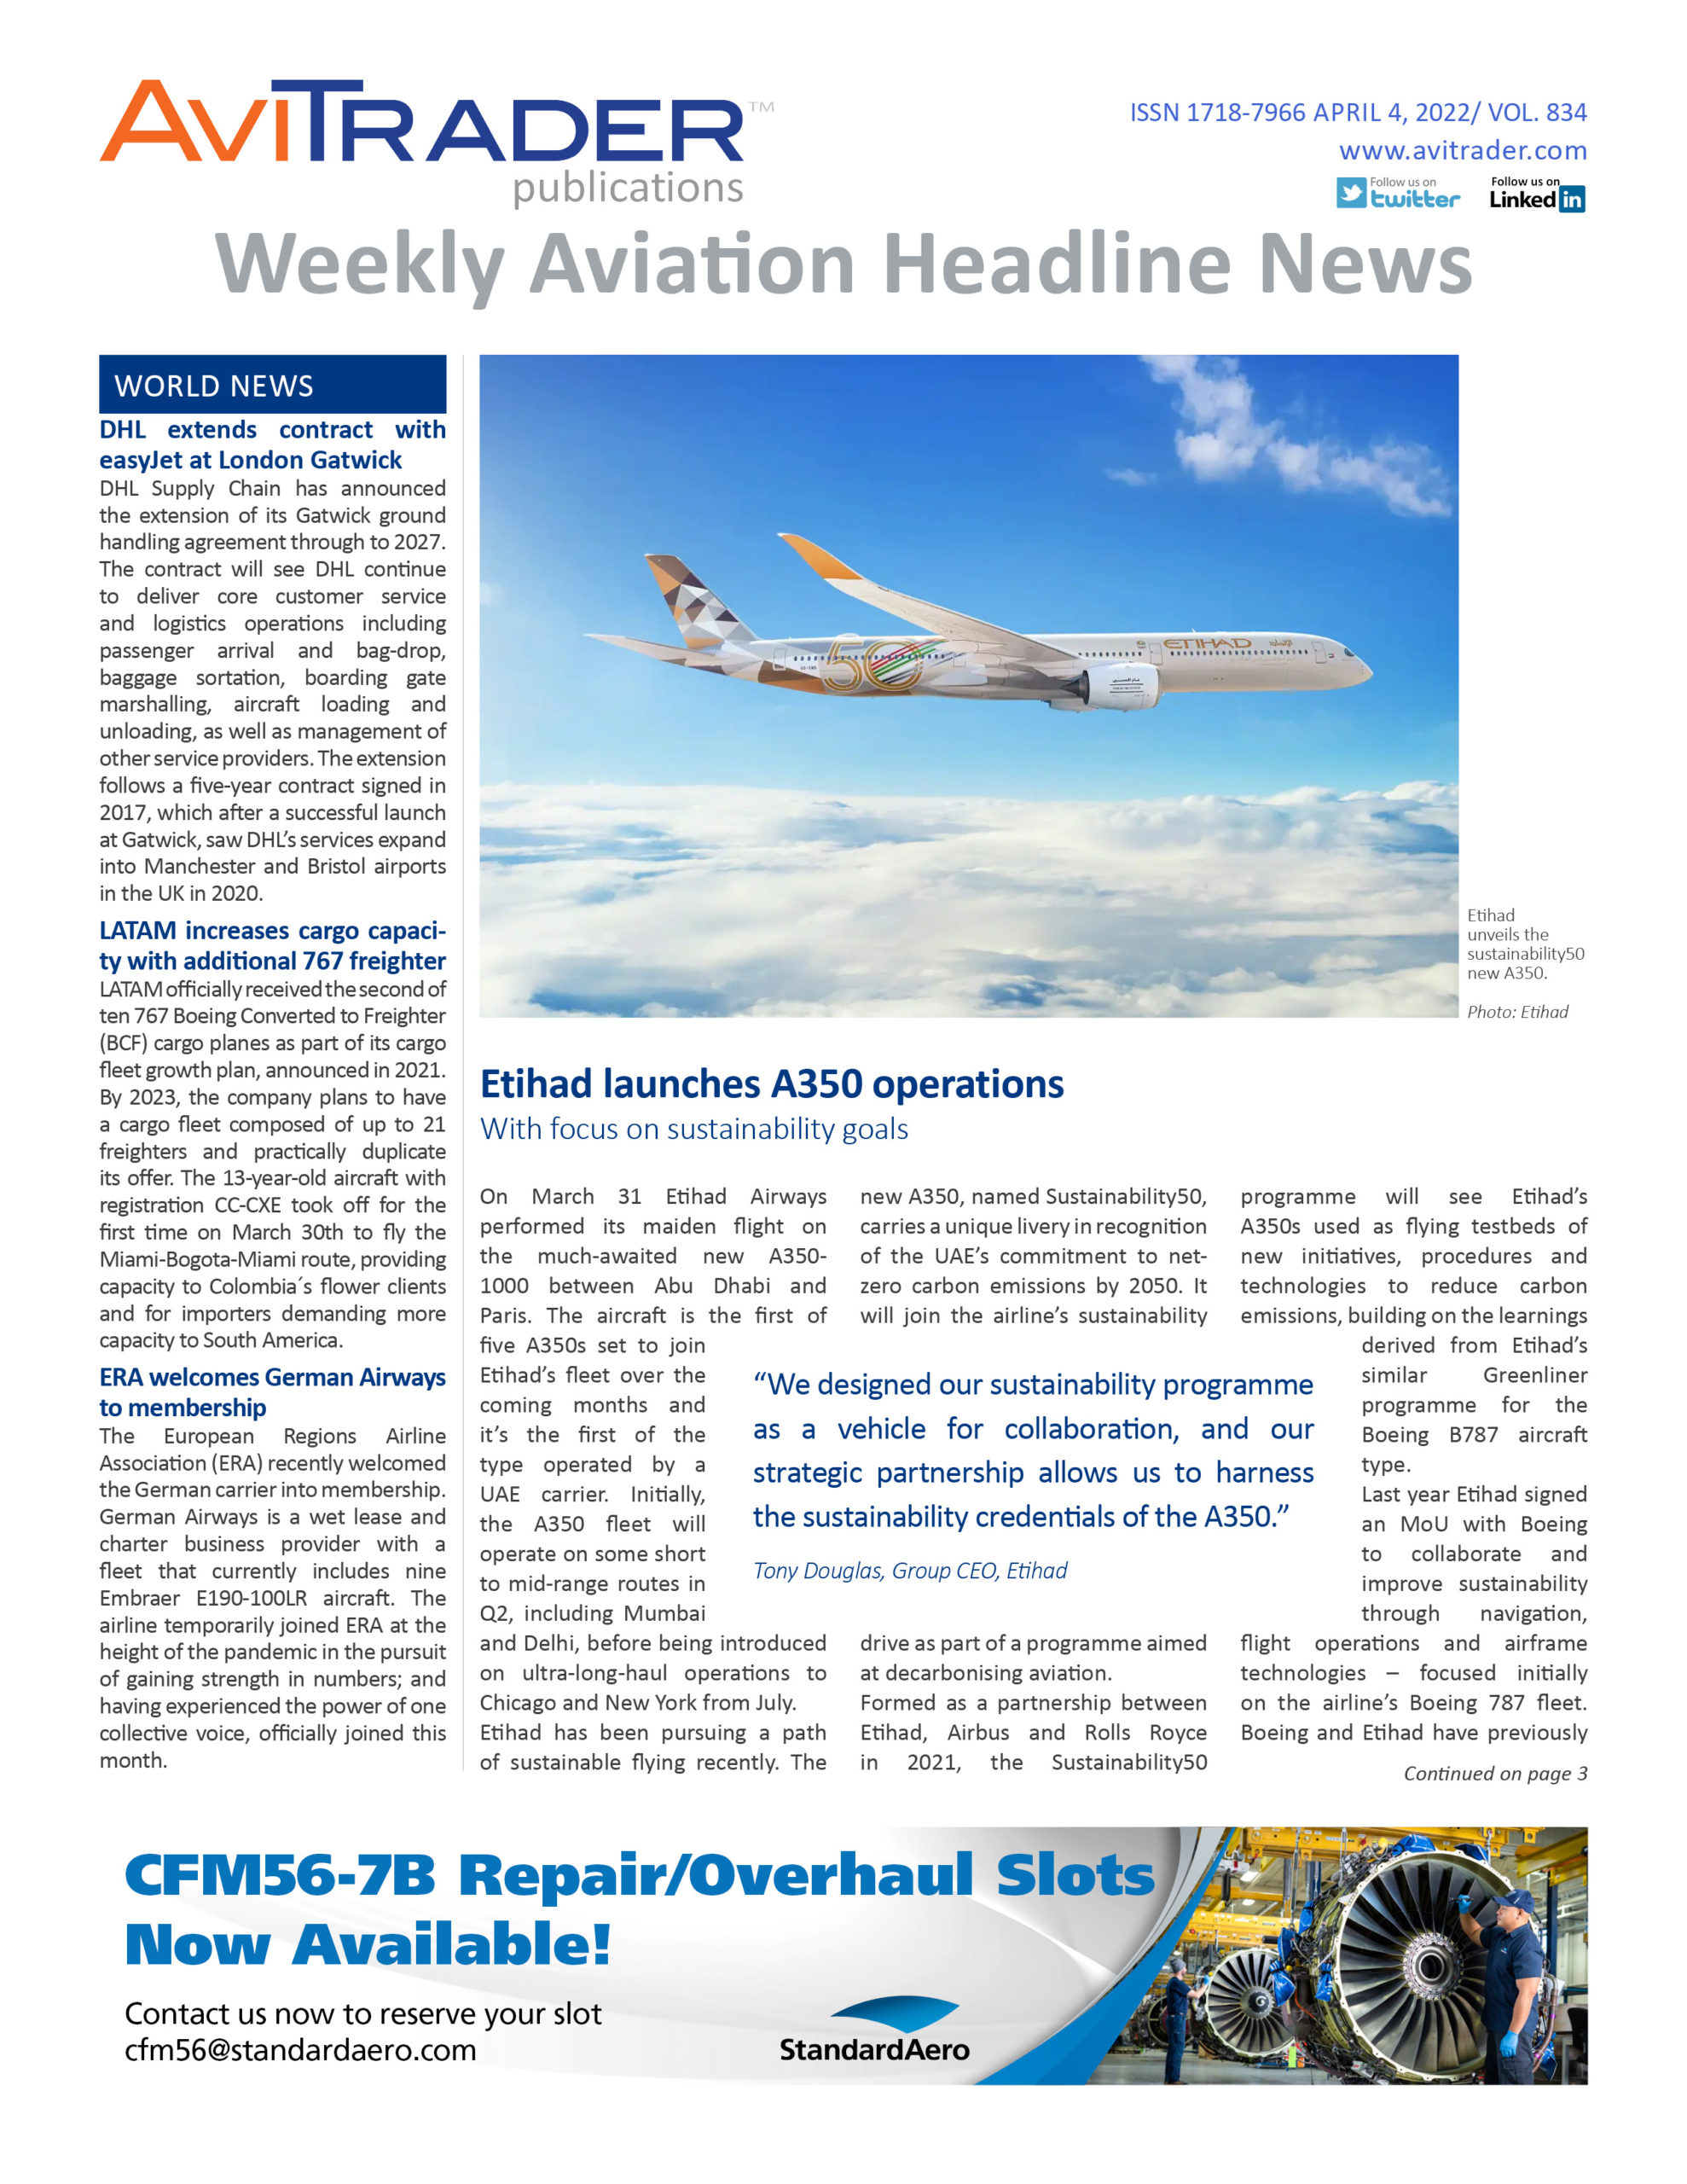 AviTrader_Weekly_Headline_News_Cover_2022-04-04